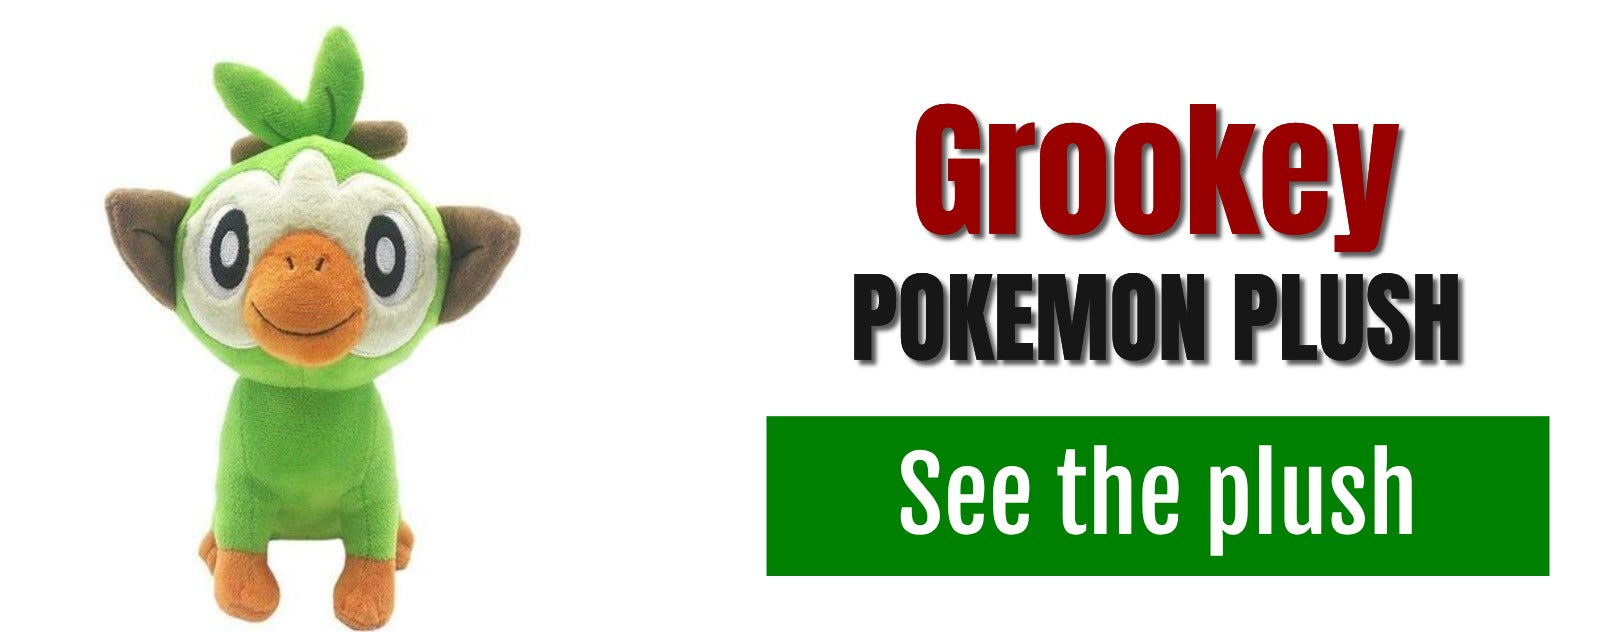 Grookey pokemon plush banner pokemon faction